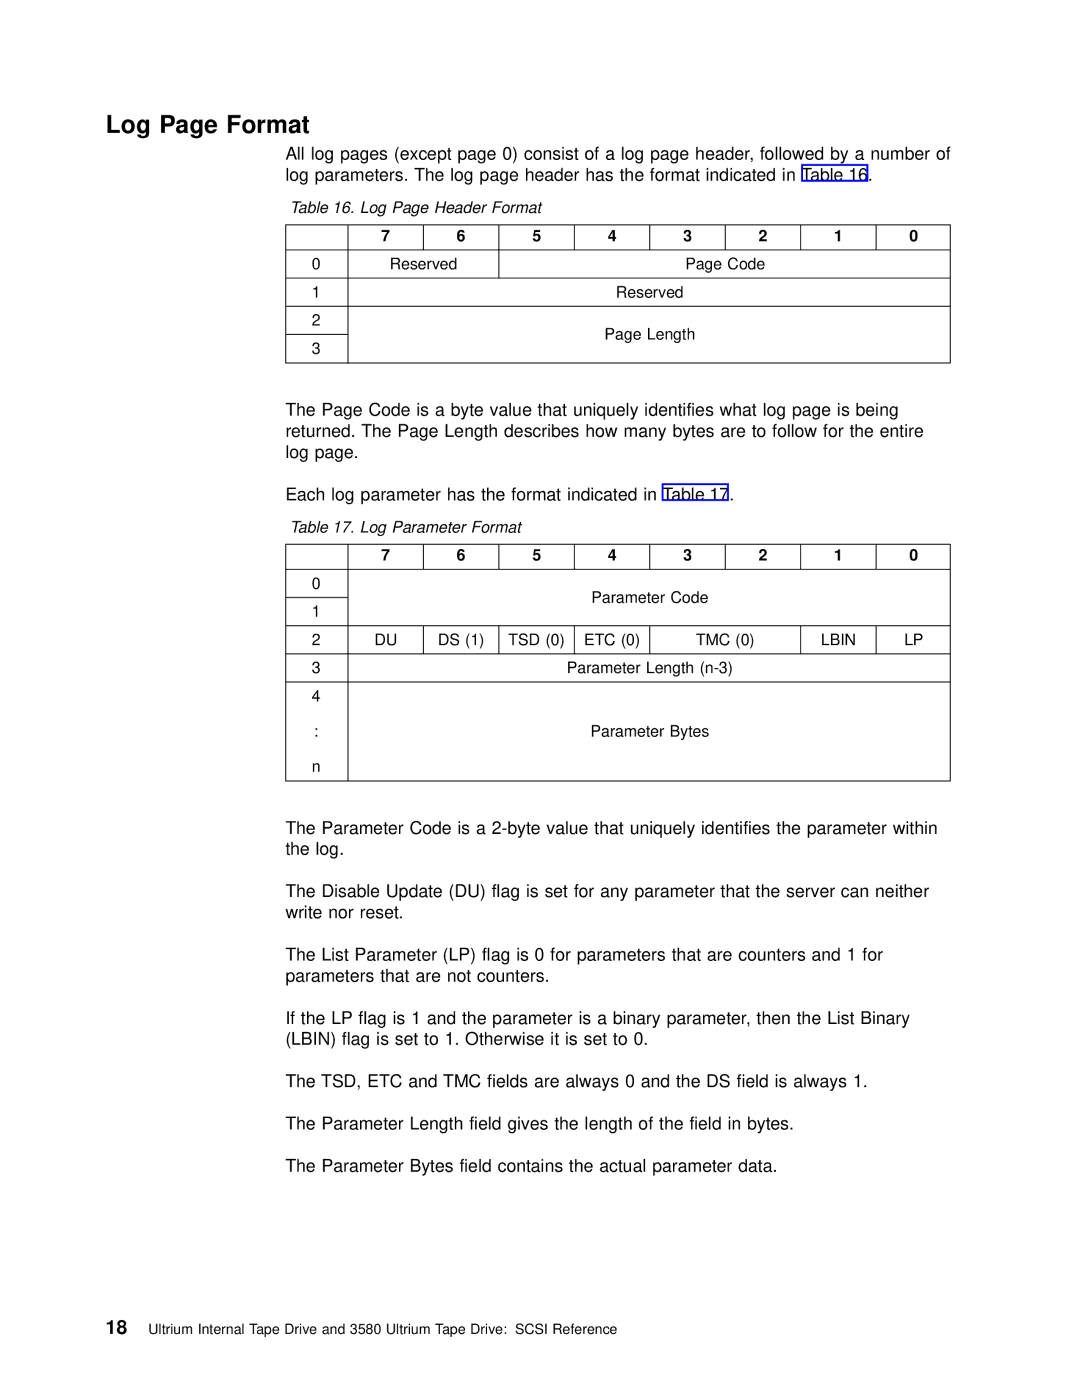 IBM T200F manual Log Page Format, Log Page Header Format, Reserved Code, Log Parameter Format, Lbin 